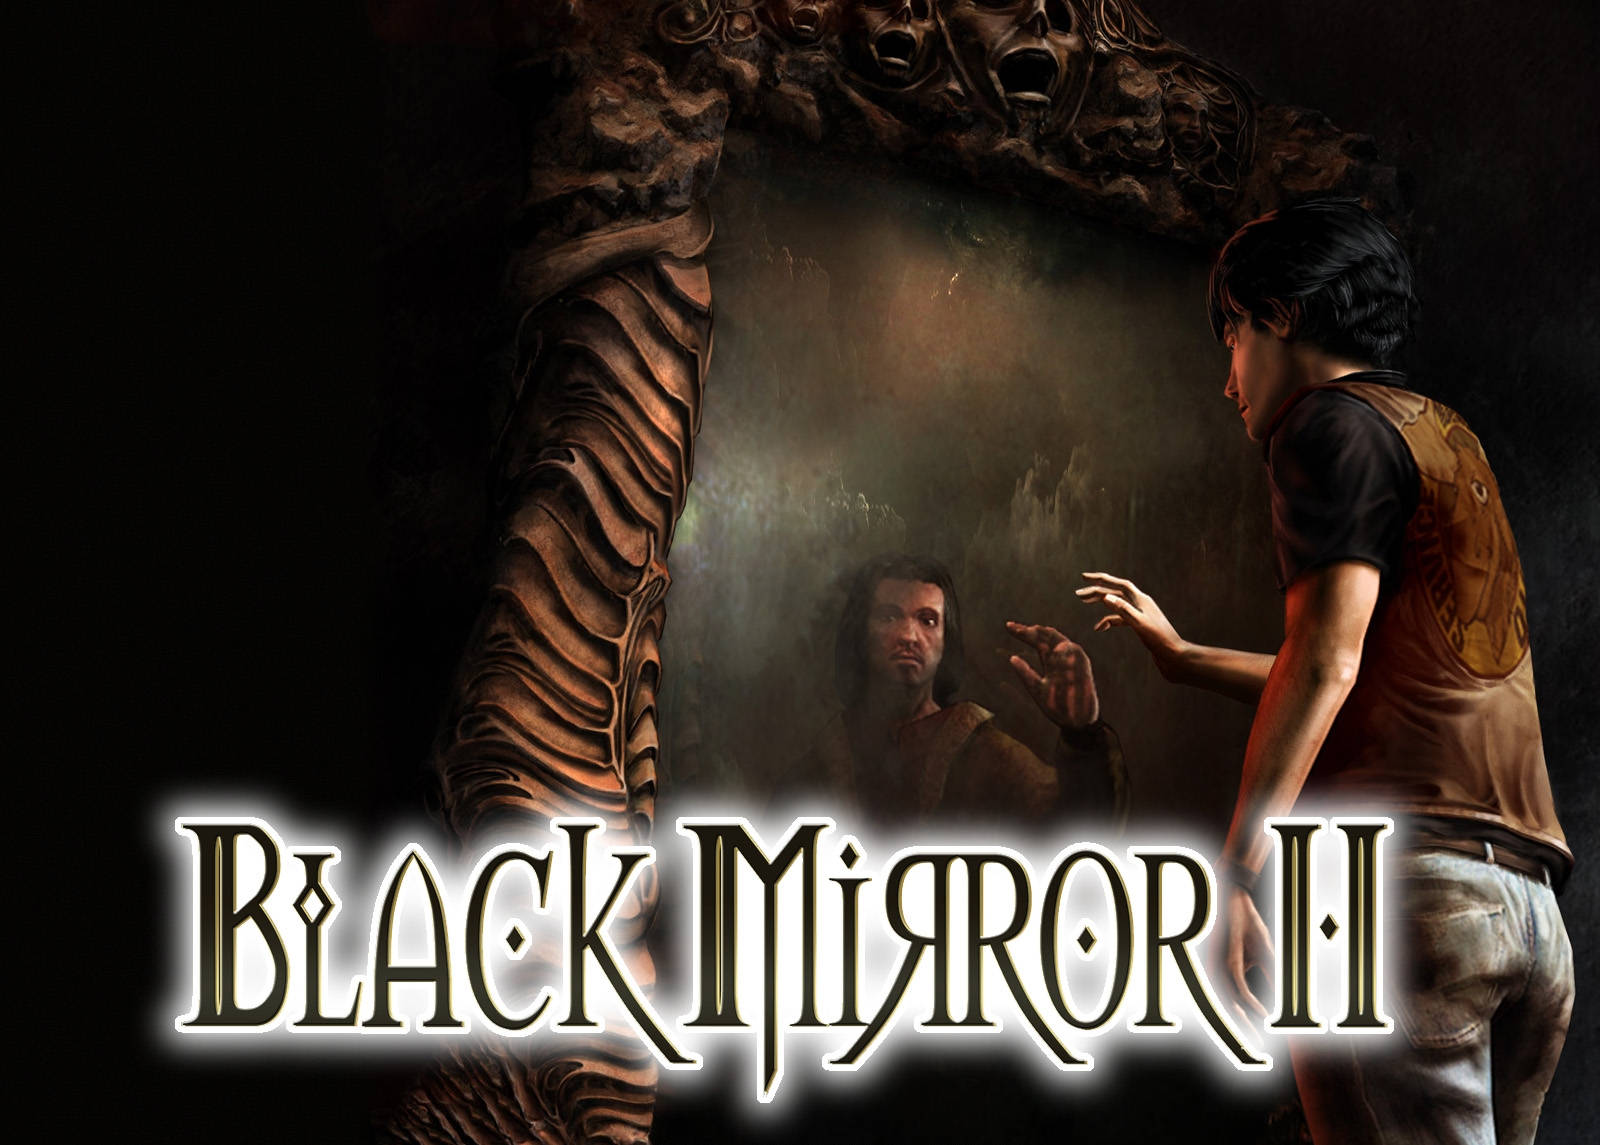 Black Mirror II Poster Wallpaper